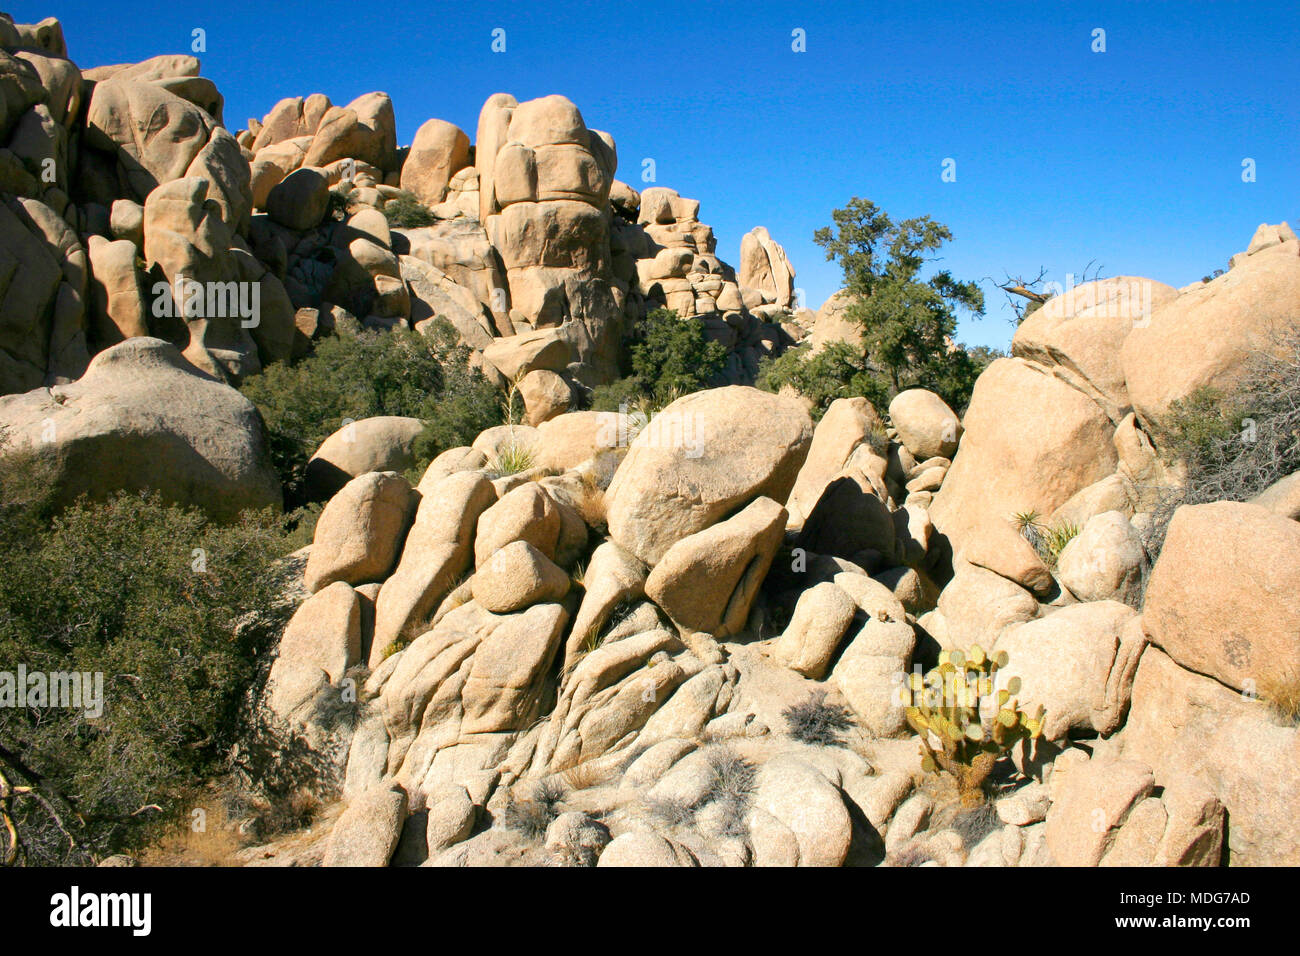 Rock Climb Hidden Valley Big Rocks Prickly Pear Cactus Mojave Desert Joshua Tree National Park Stock Photo